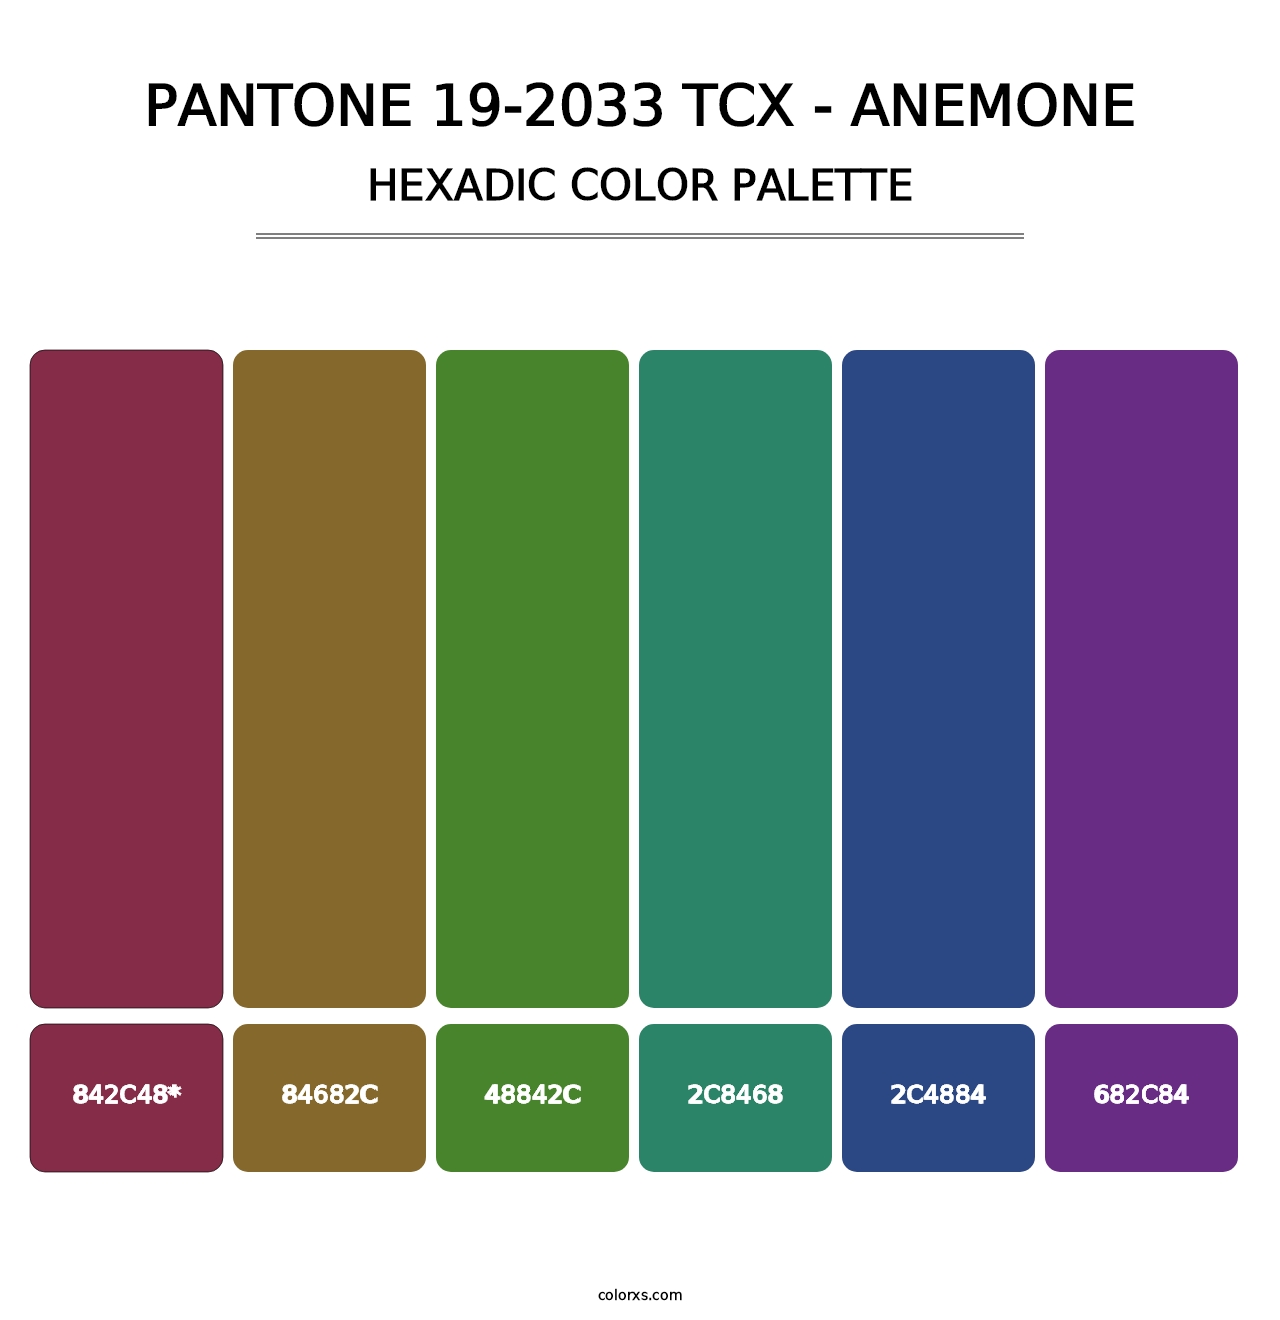 PANTONE 19-2033 TCX - Anemone - Hexadic Color Palette